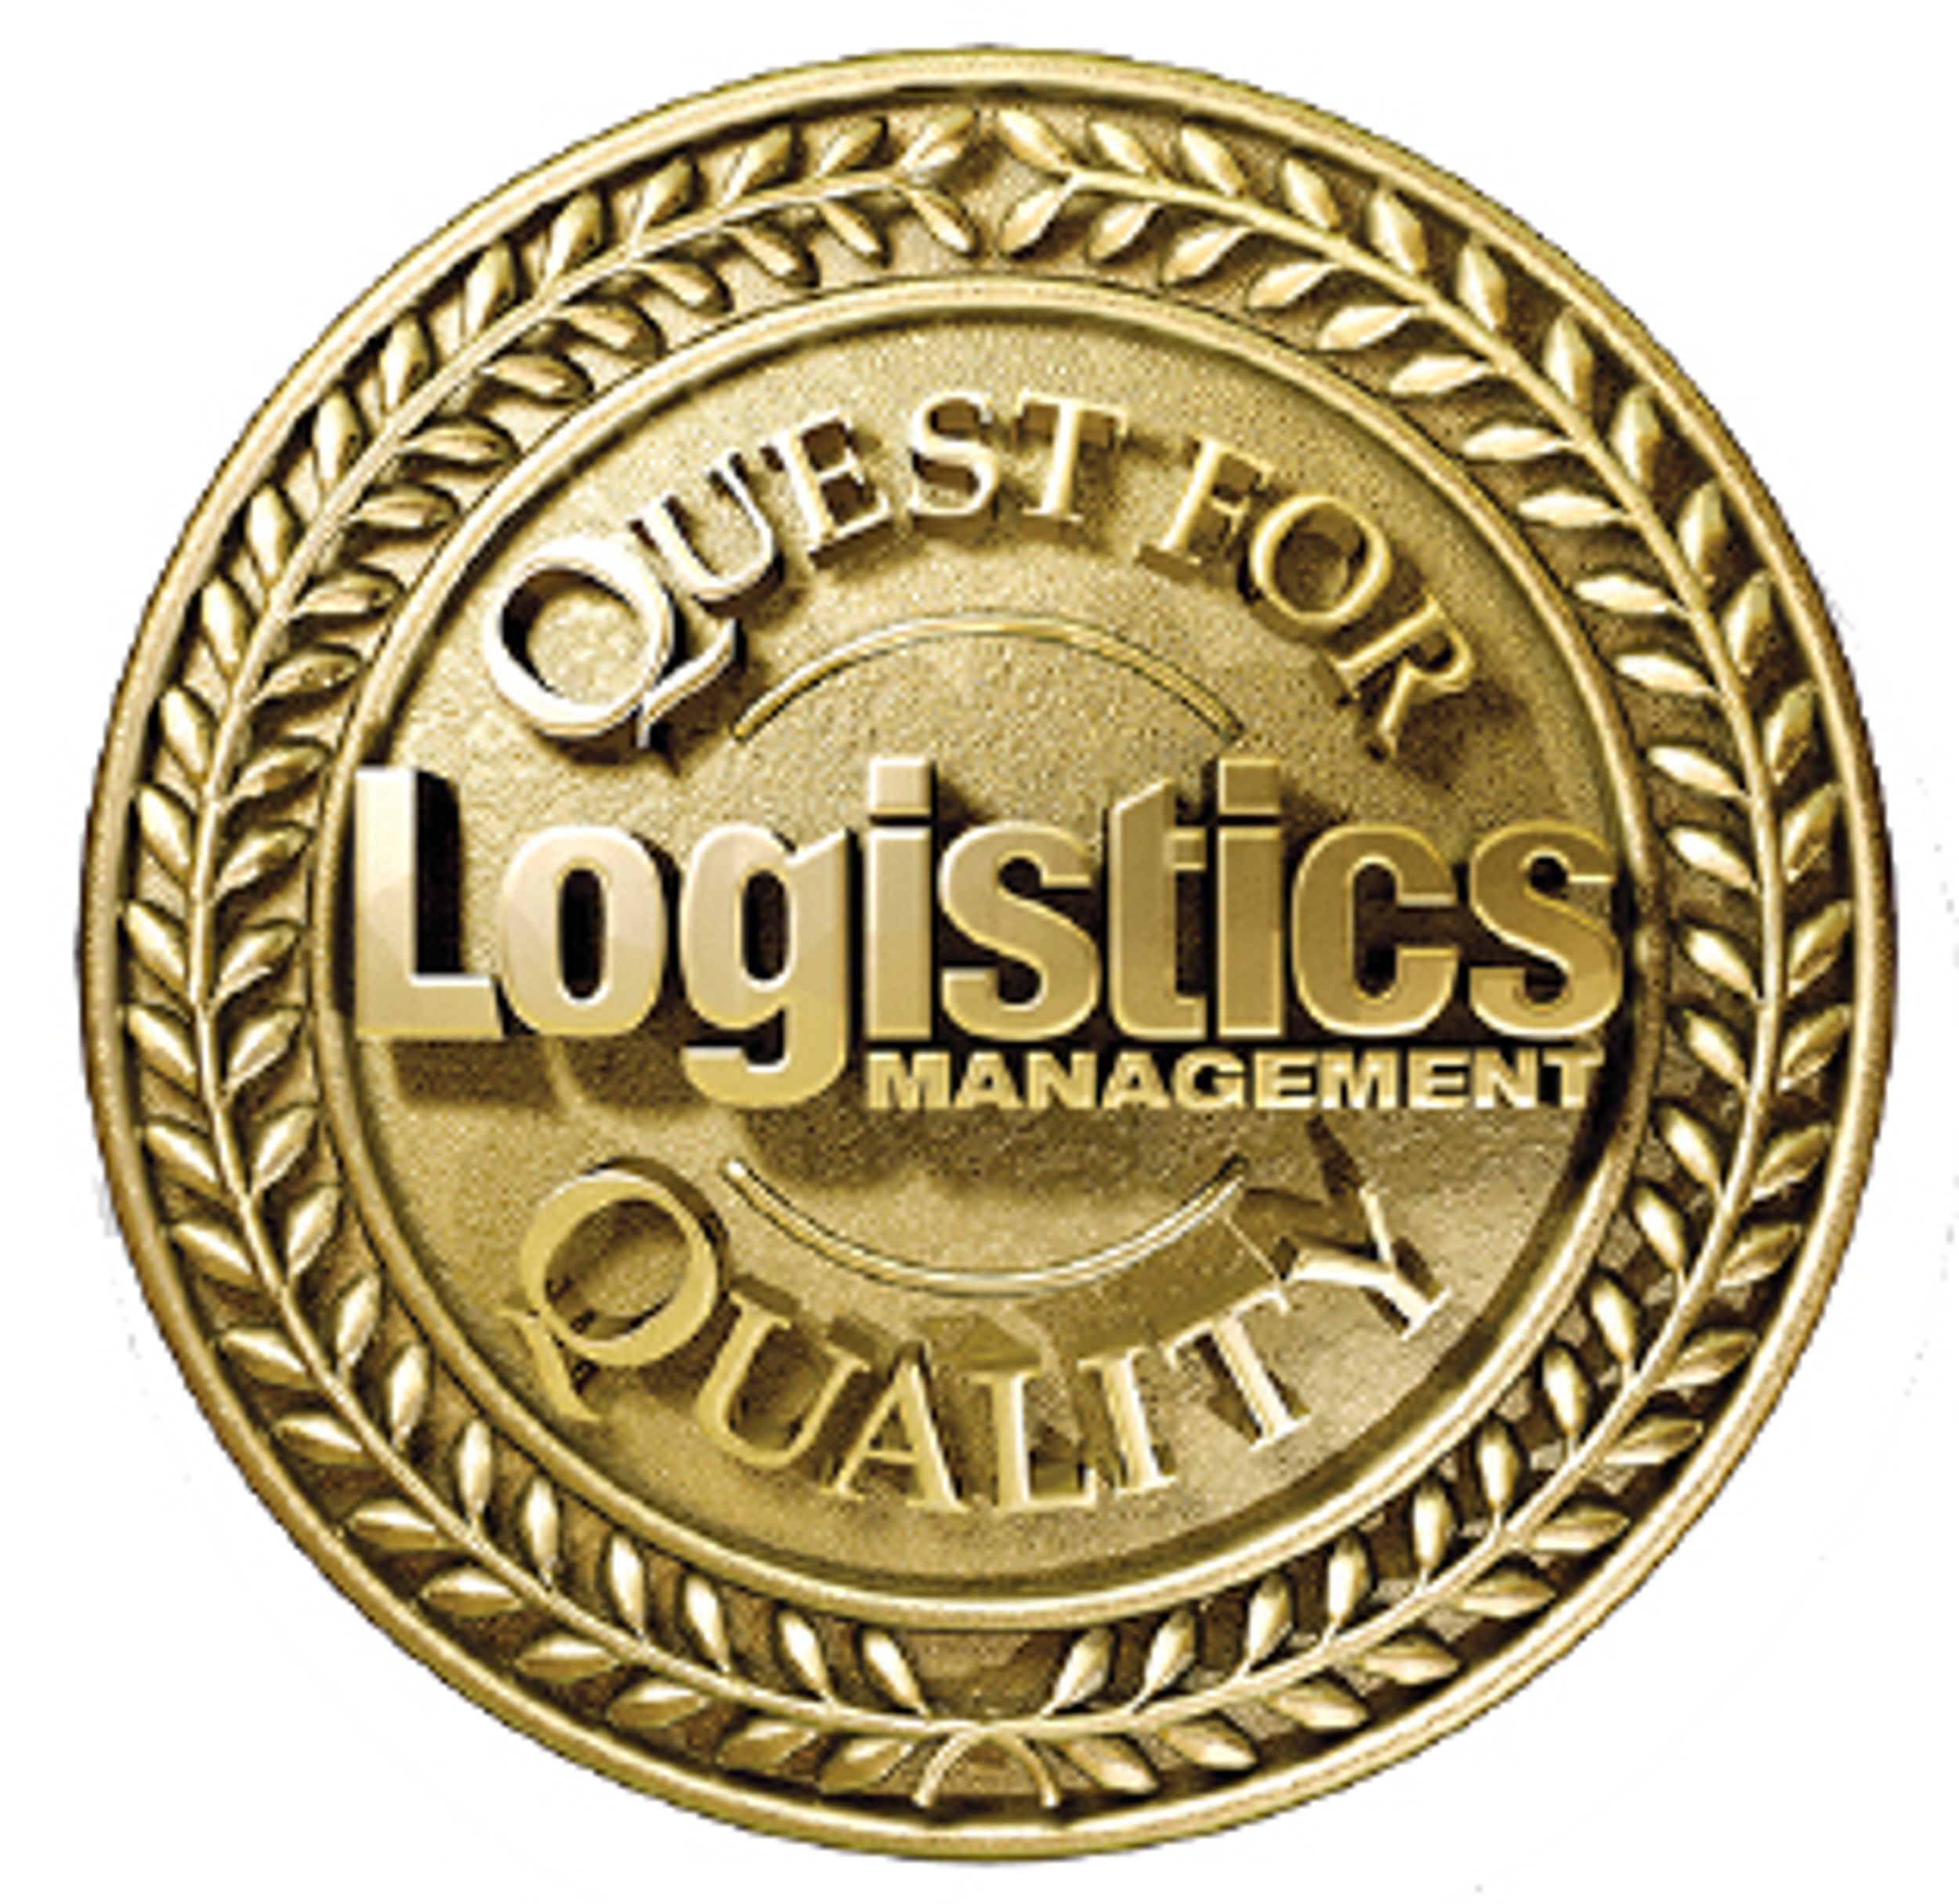 Penske Logistics is Repeat Quest for Quality Award Winner